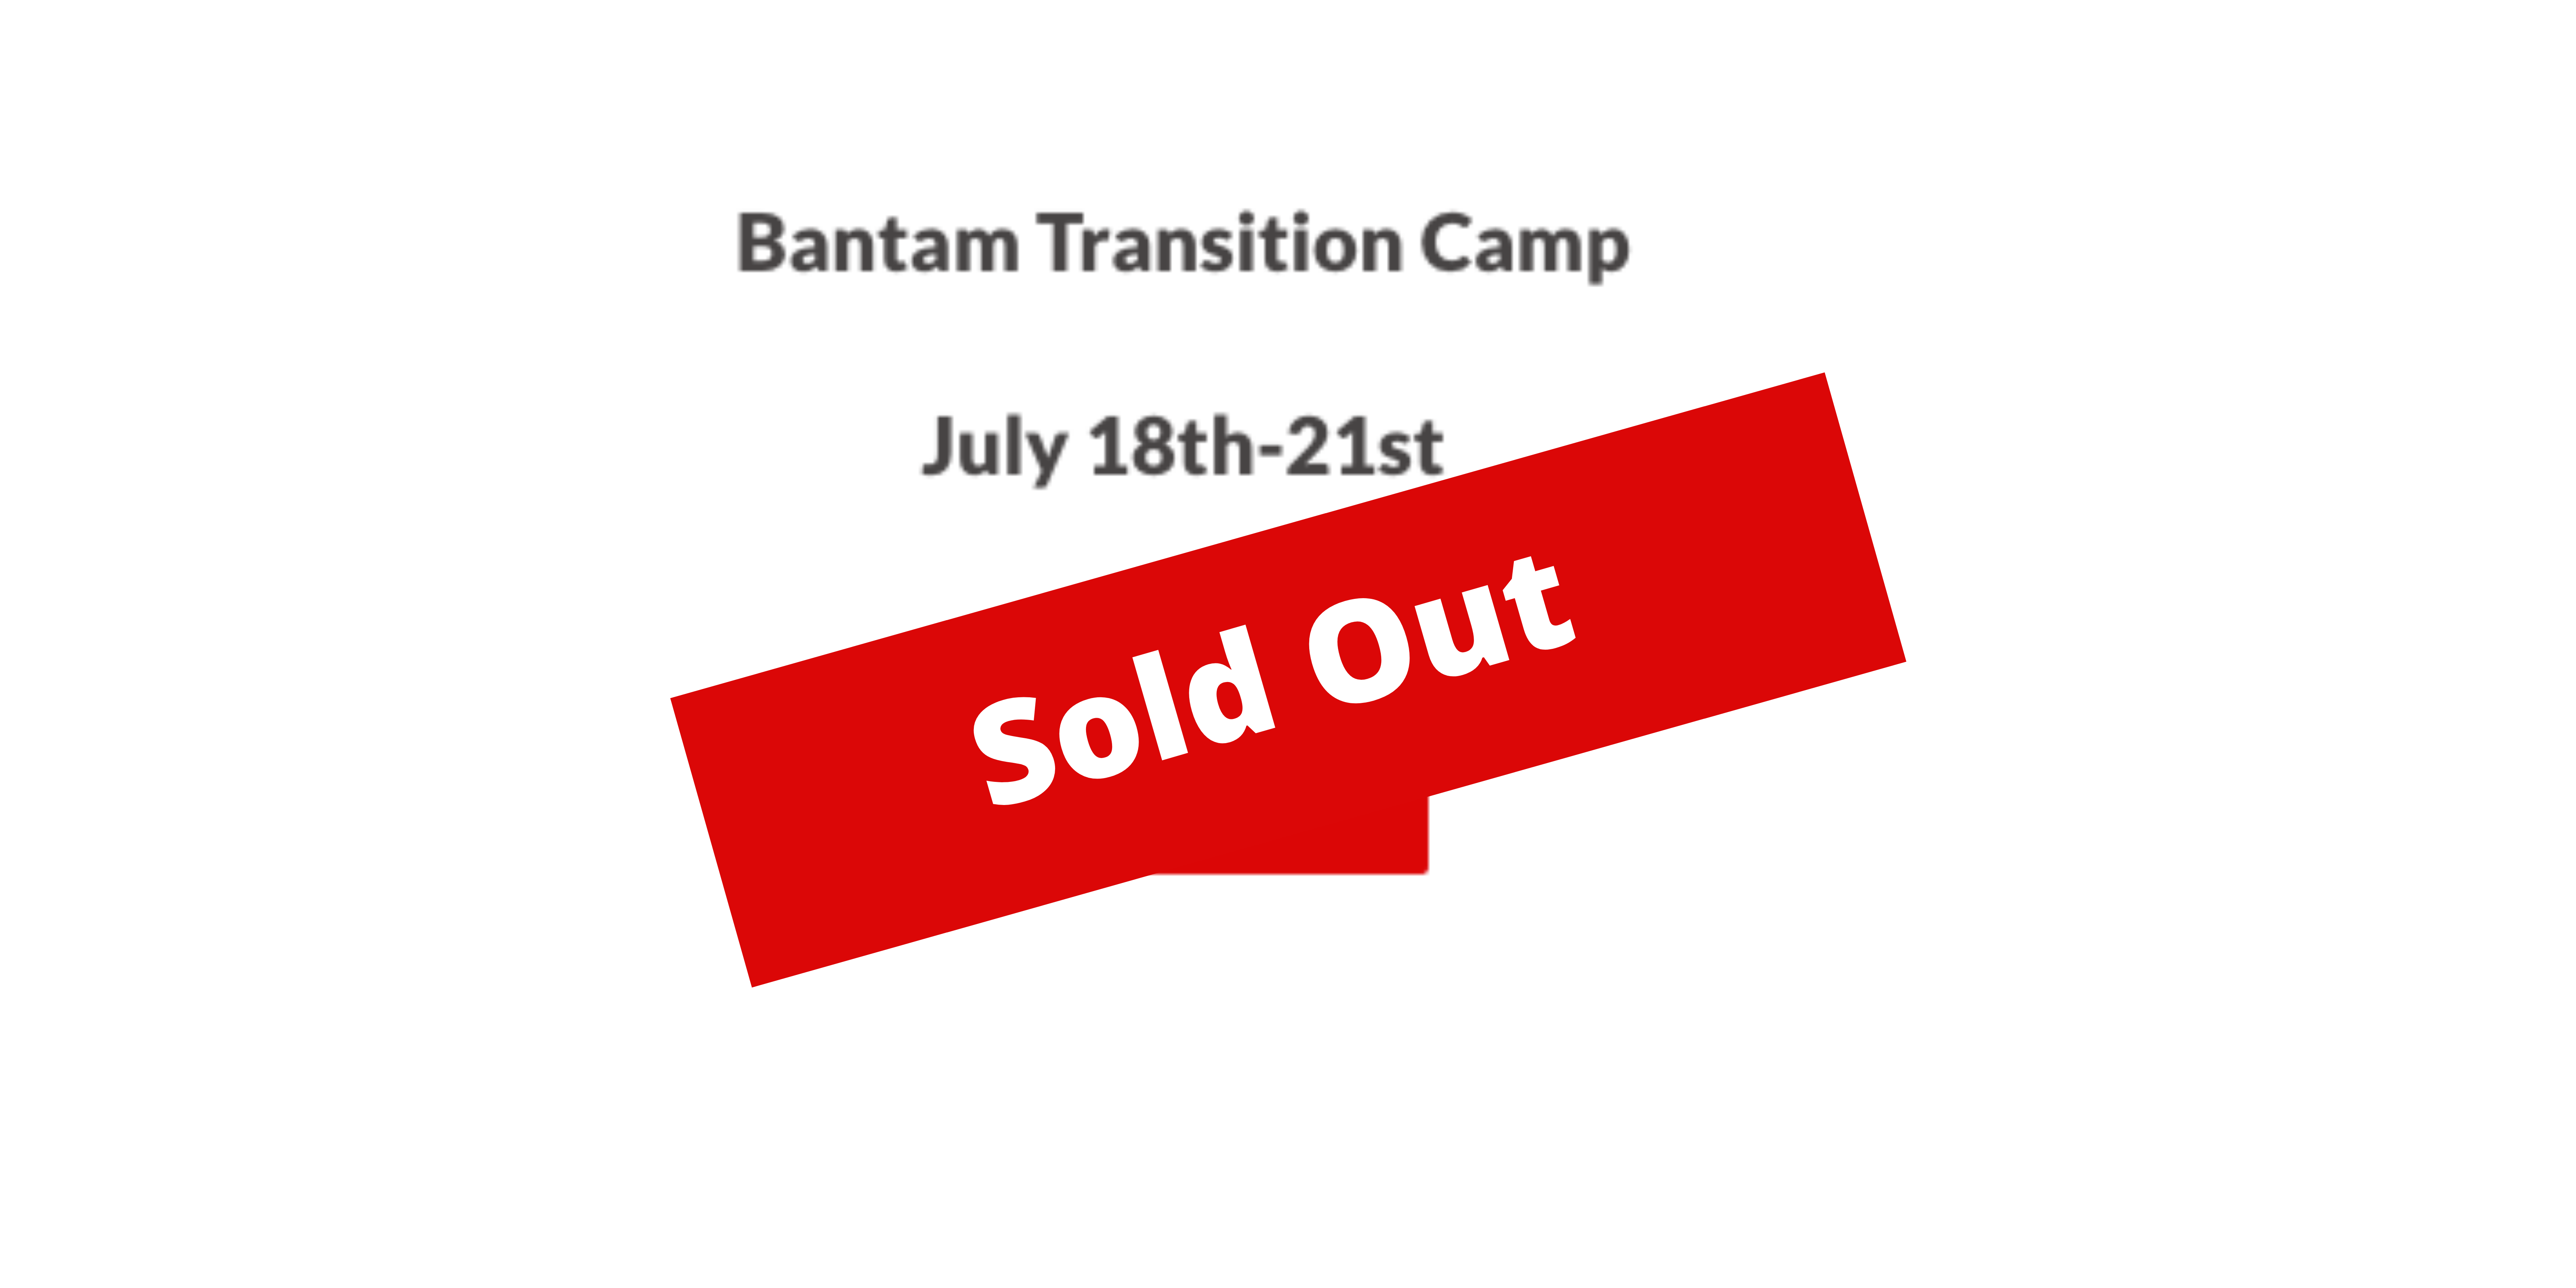 bantam transition camp - sold out